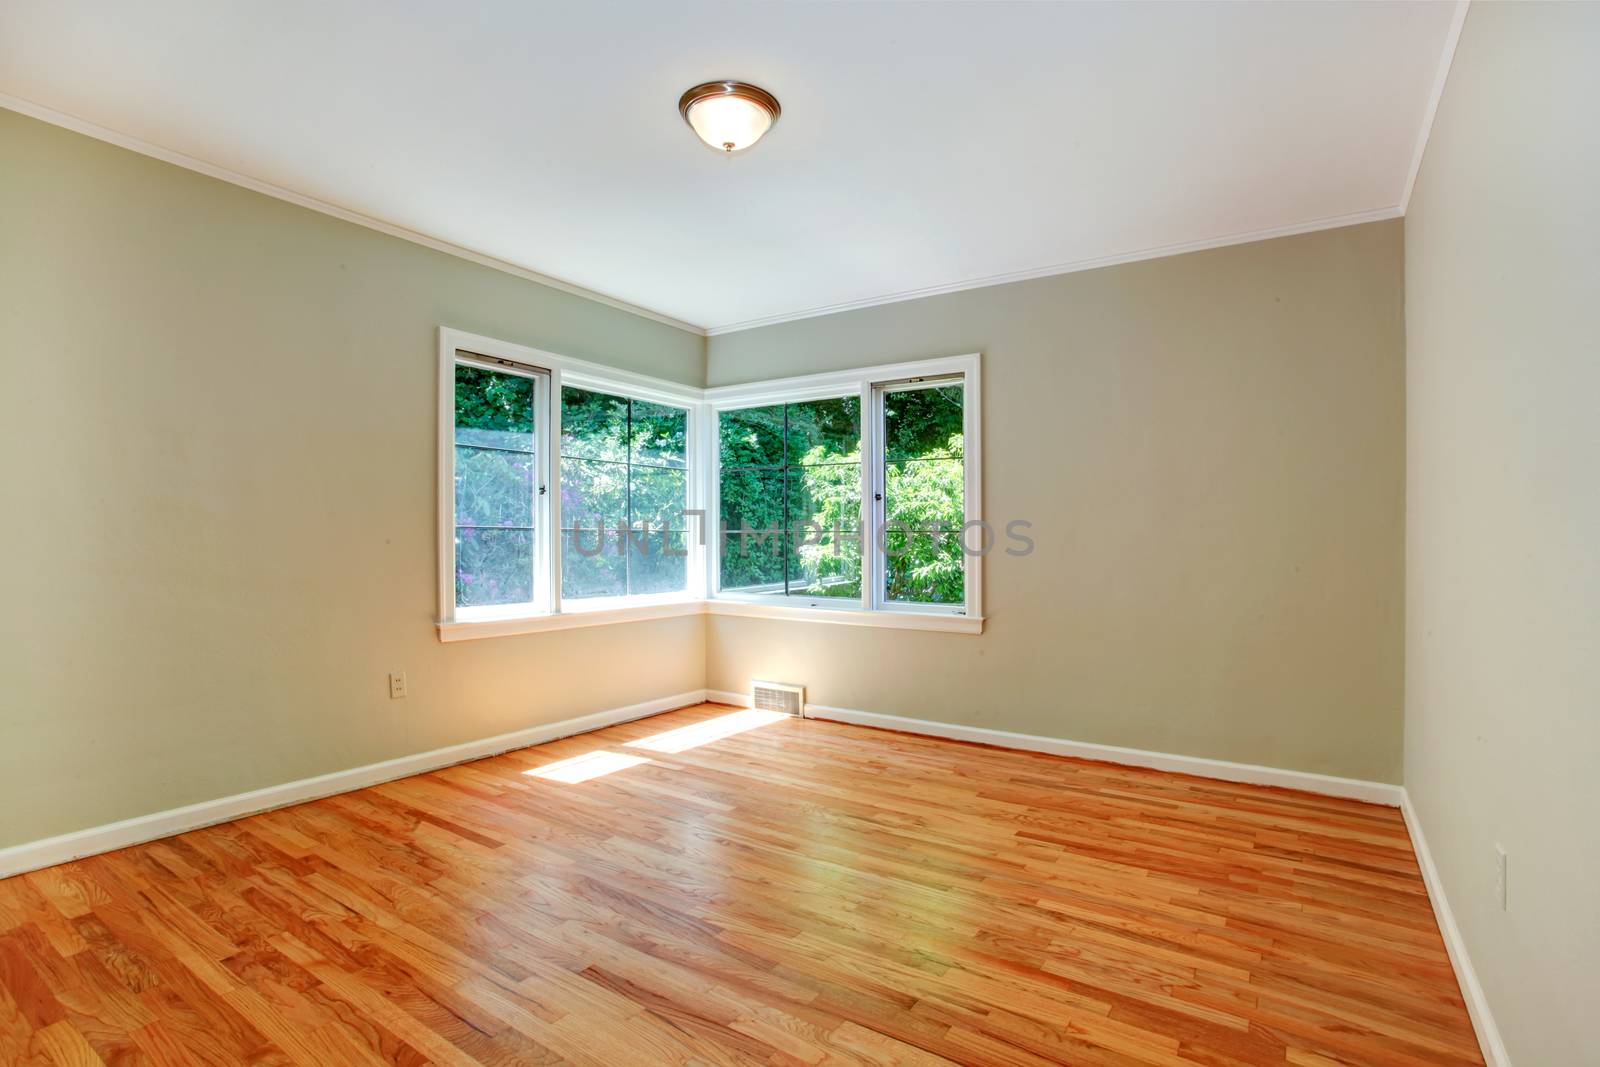 Empty master bedroom interior with windows and hardwood floor